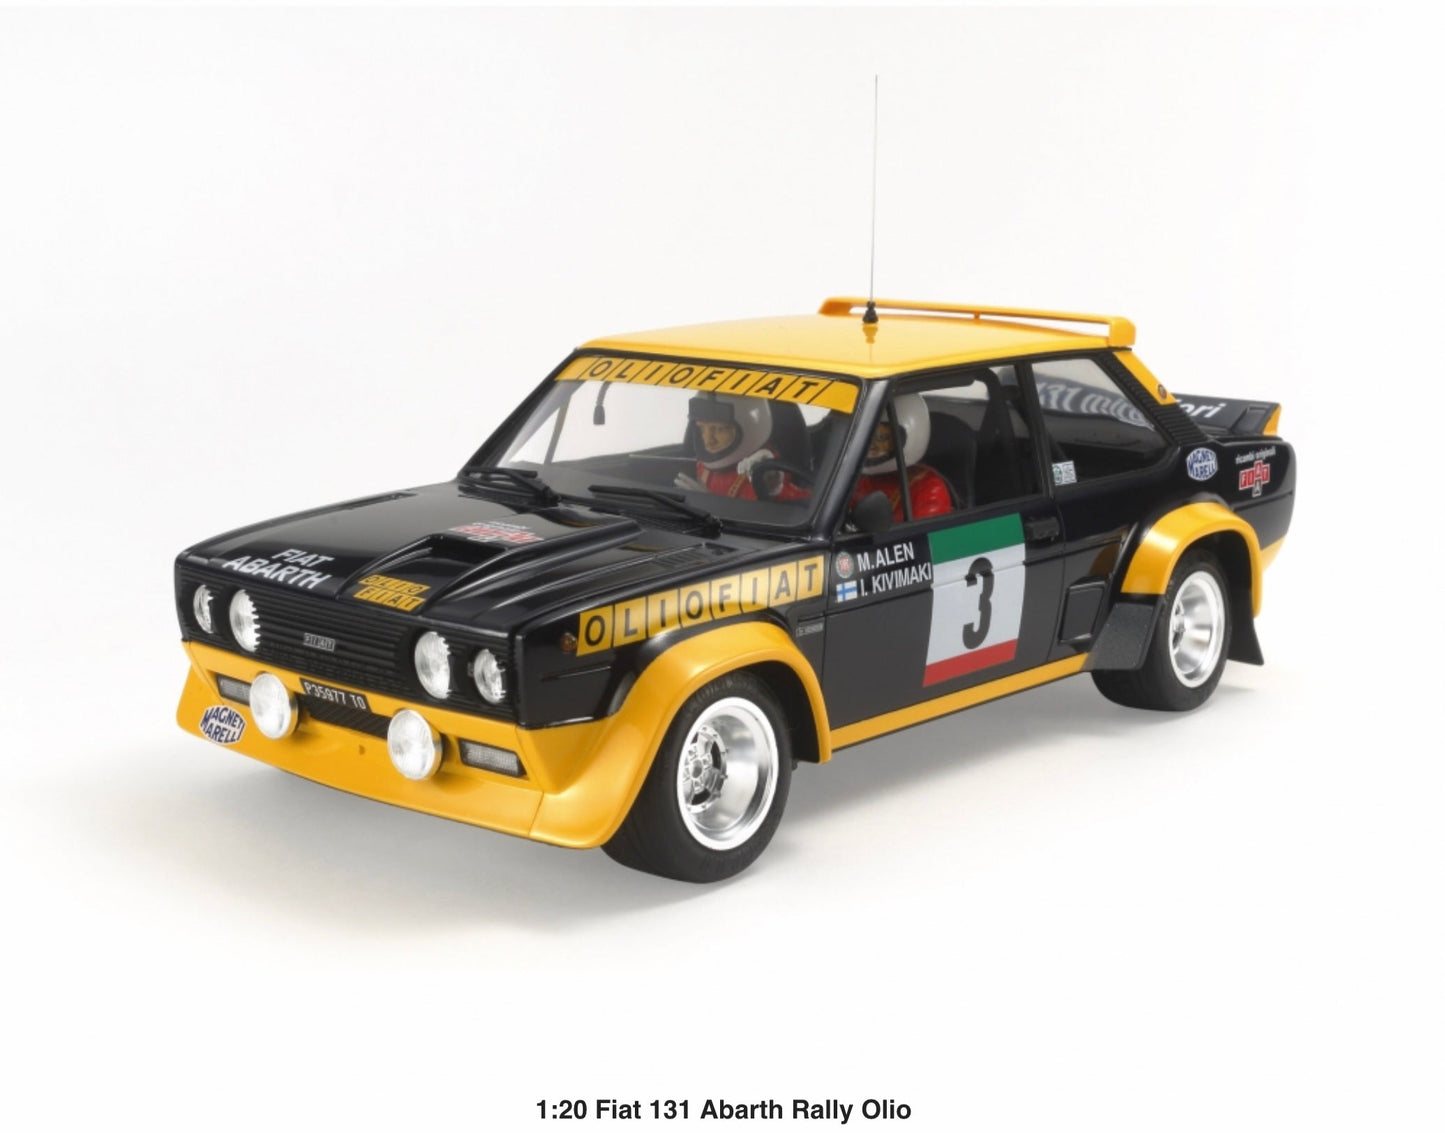 FIAT 131 ABARTH -OLIO FIAT - RALLY PORTUGAL 1977